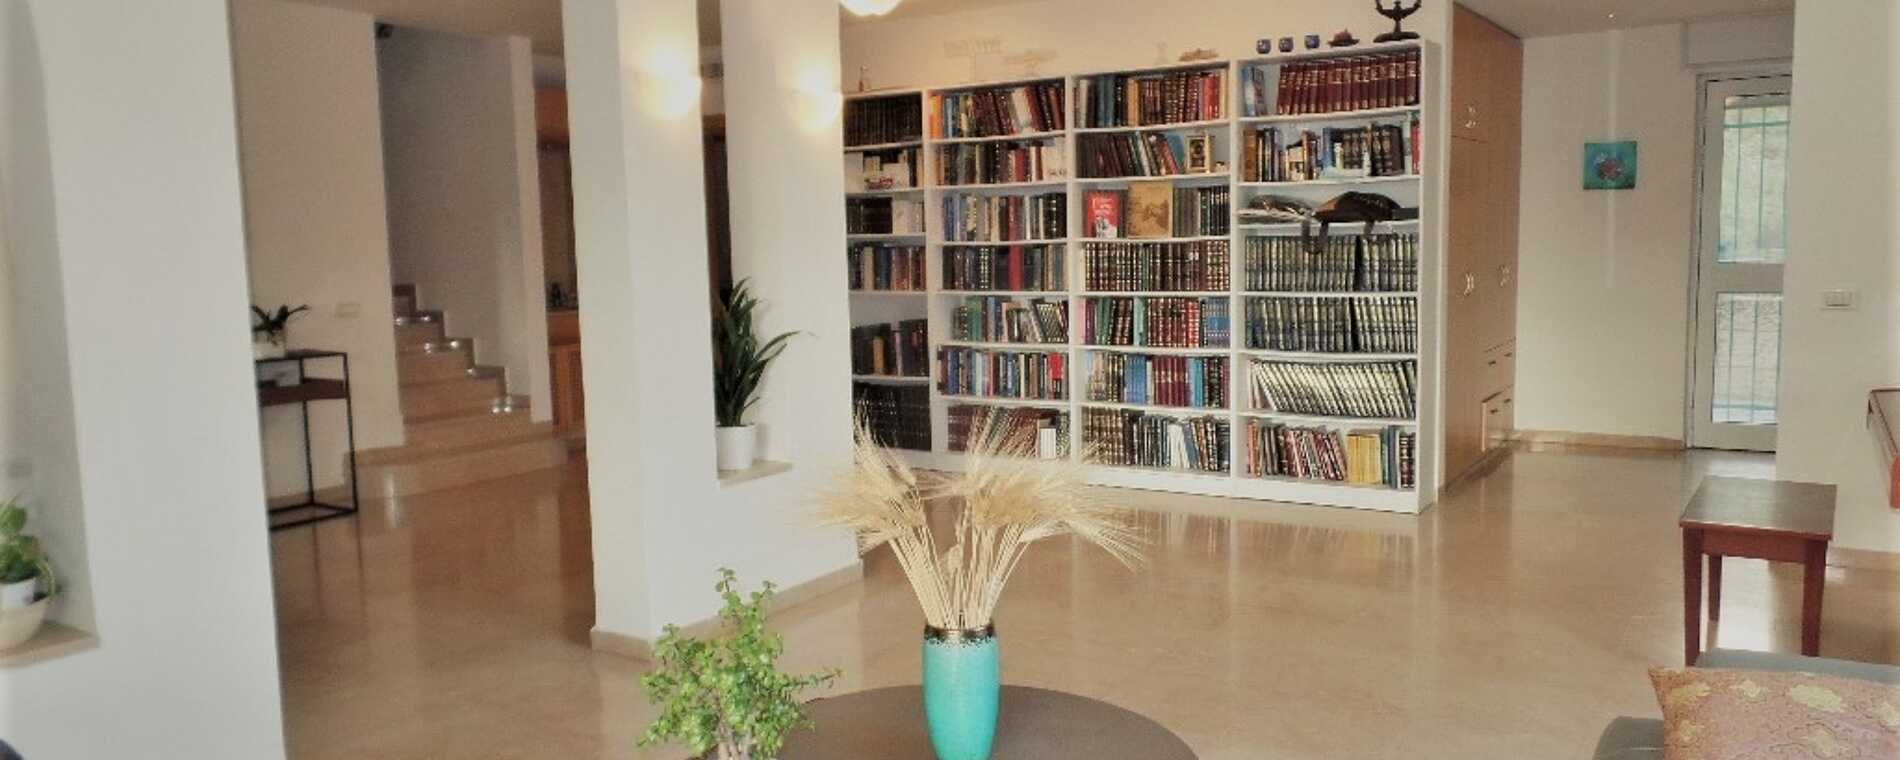 assets/images/properties/ER13 Living Room Bookshelf.jpg